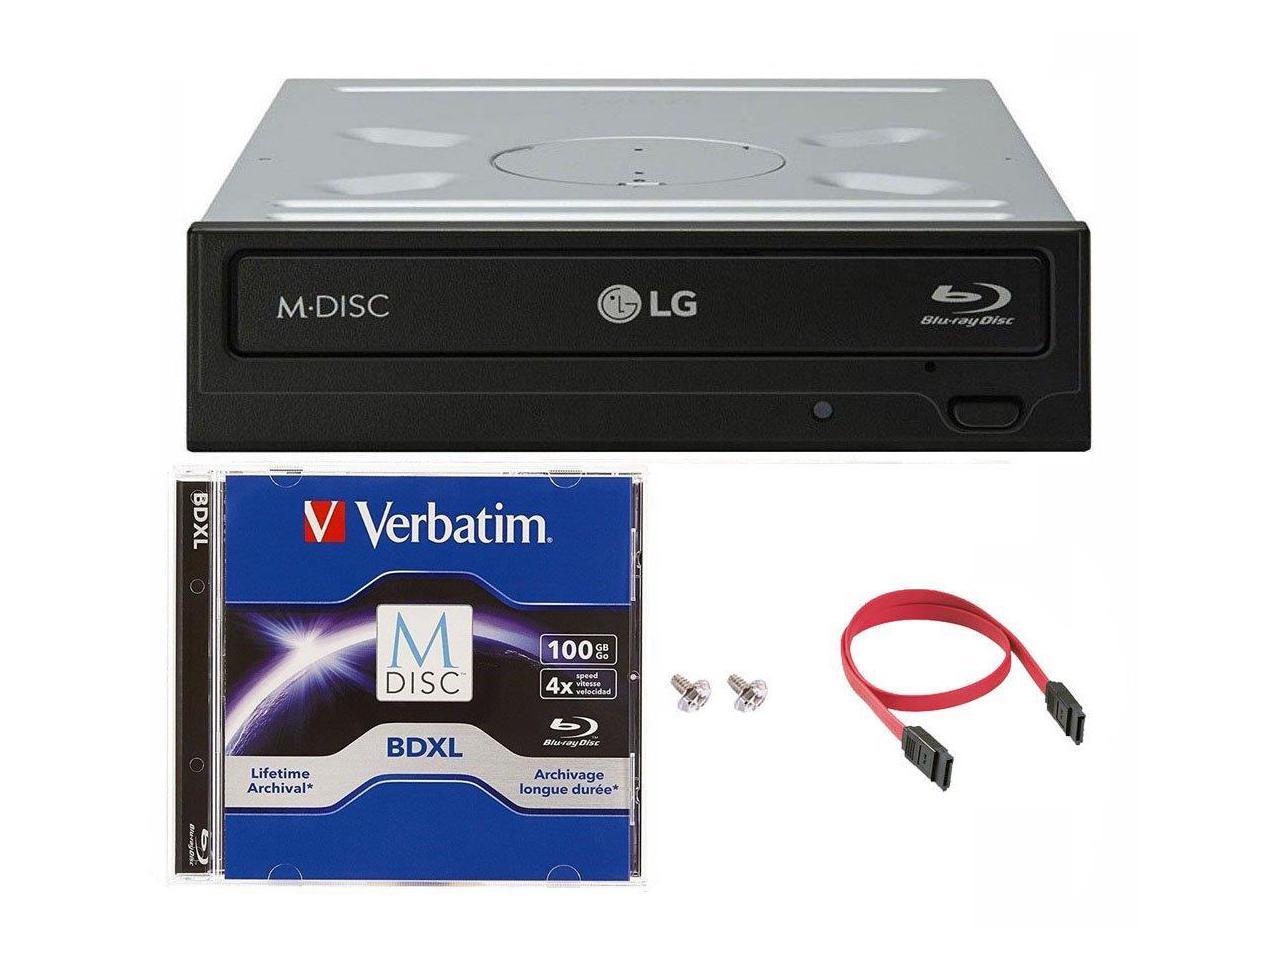 Satisfacer fuego Degenerar LG WH16NS40 16X Blu-ray BDXL DVD CD Internal Burner Drive Bundle with Free 100GB  M-DISC BDXL + SATA Cable + Mounting Screws - Newegg.com